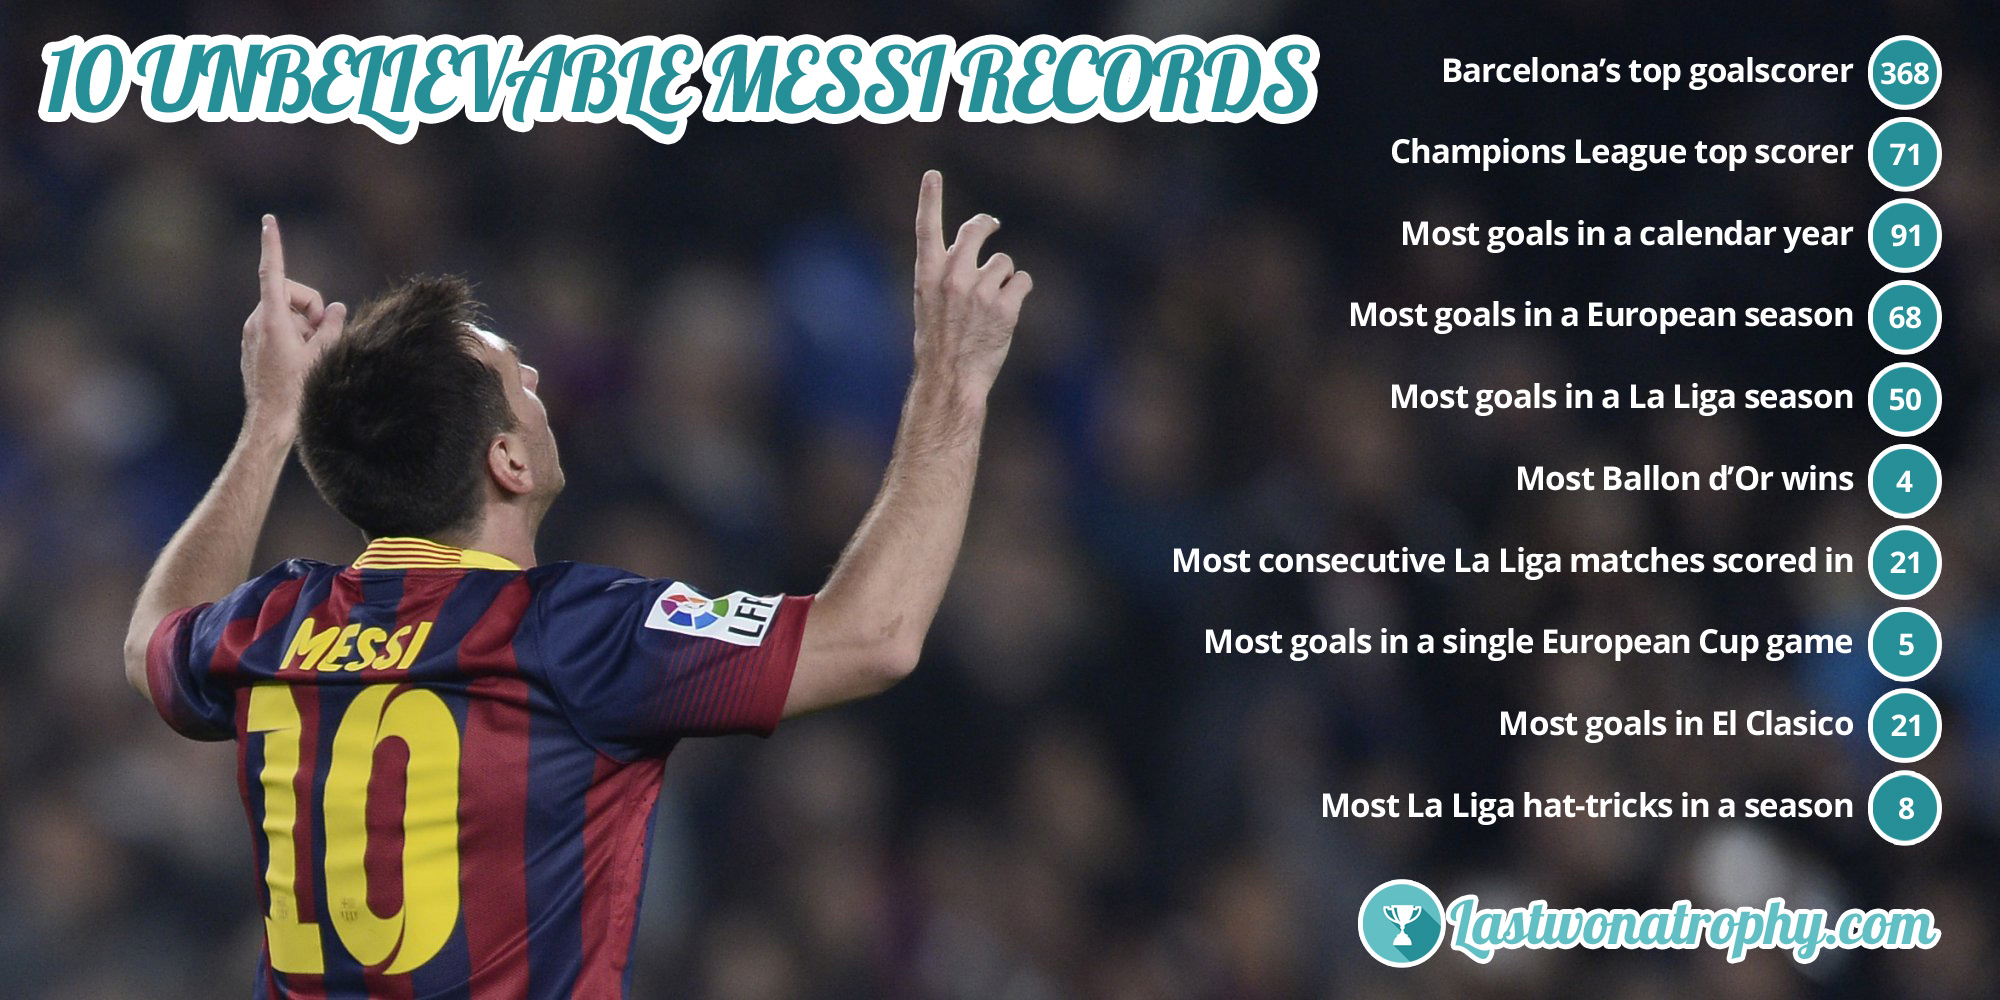 10 unbelievable Messi records